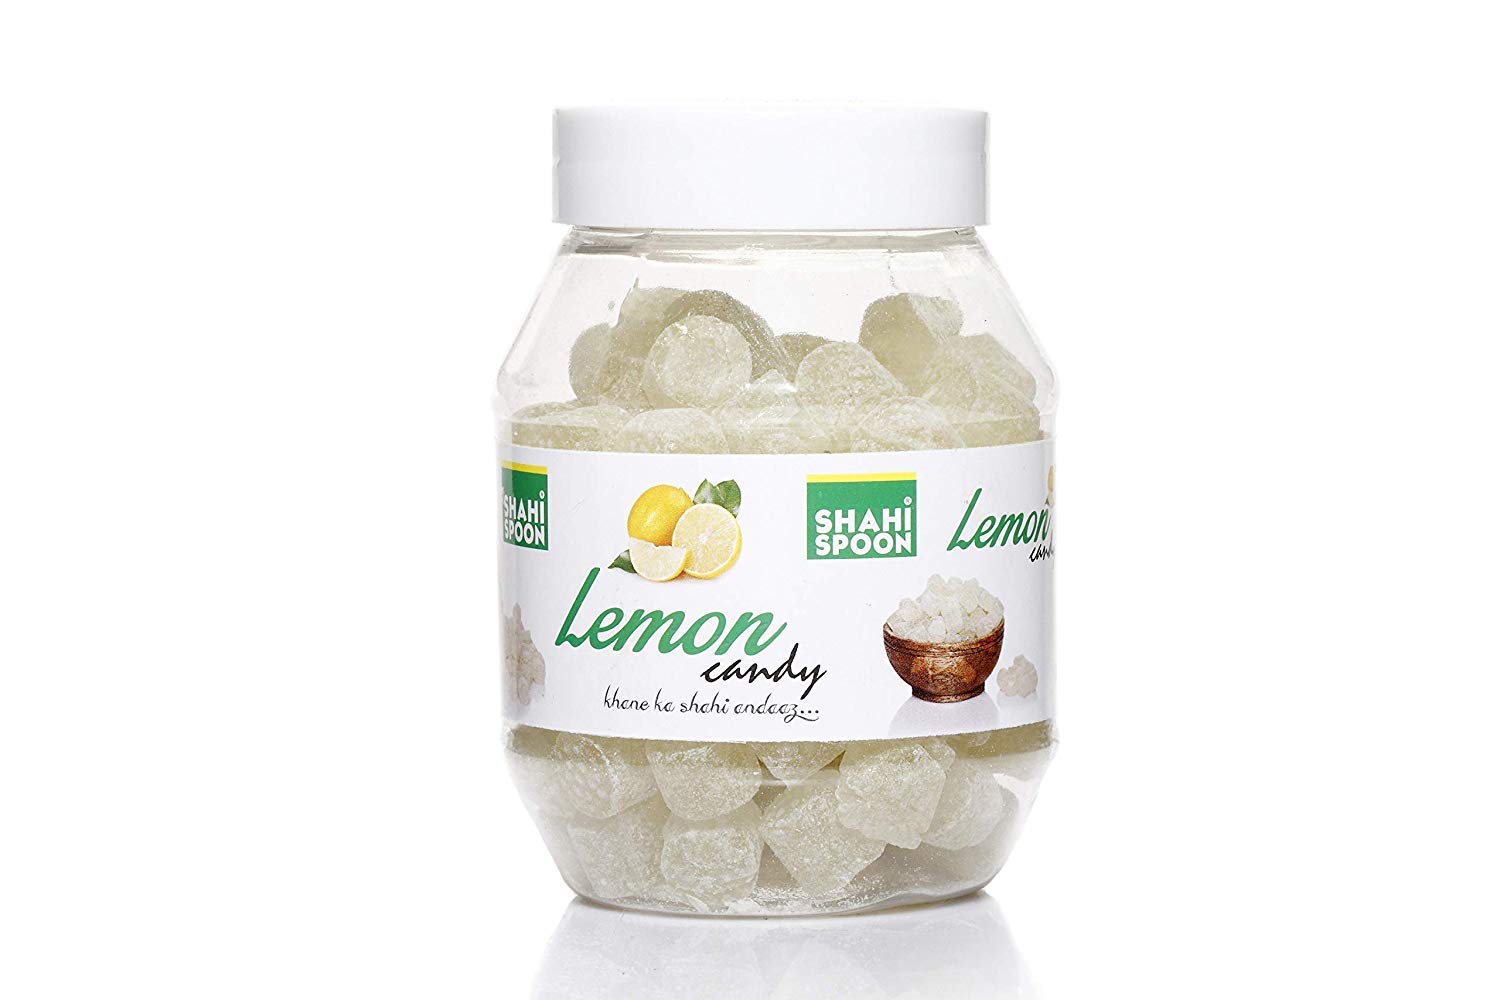 Shahi Spoon Lemon Candy Image